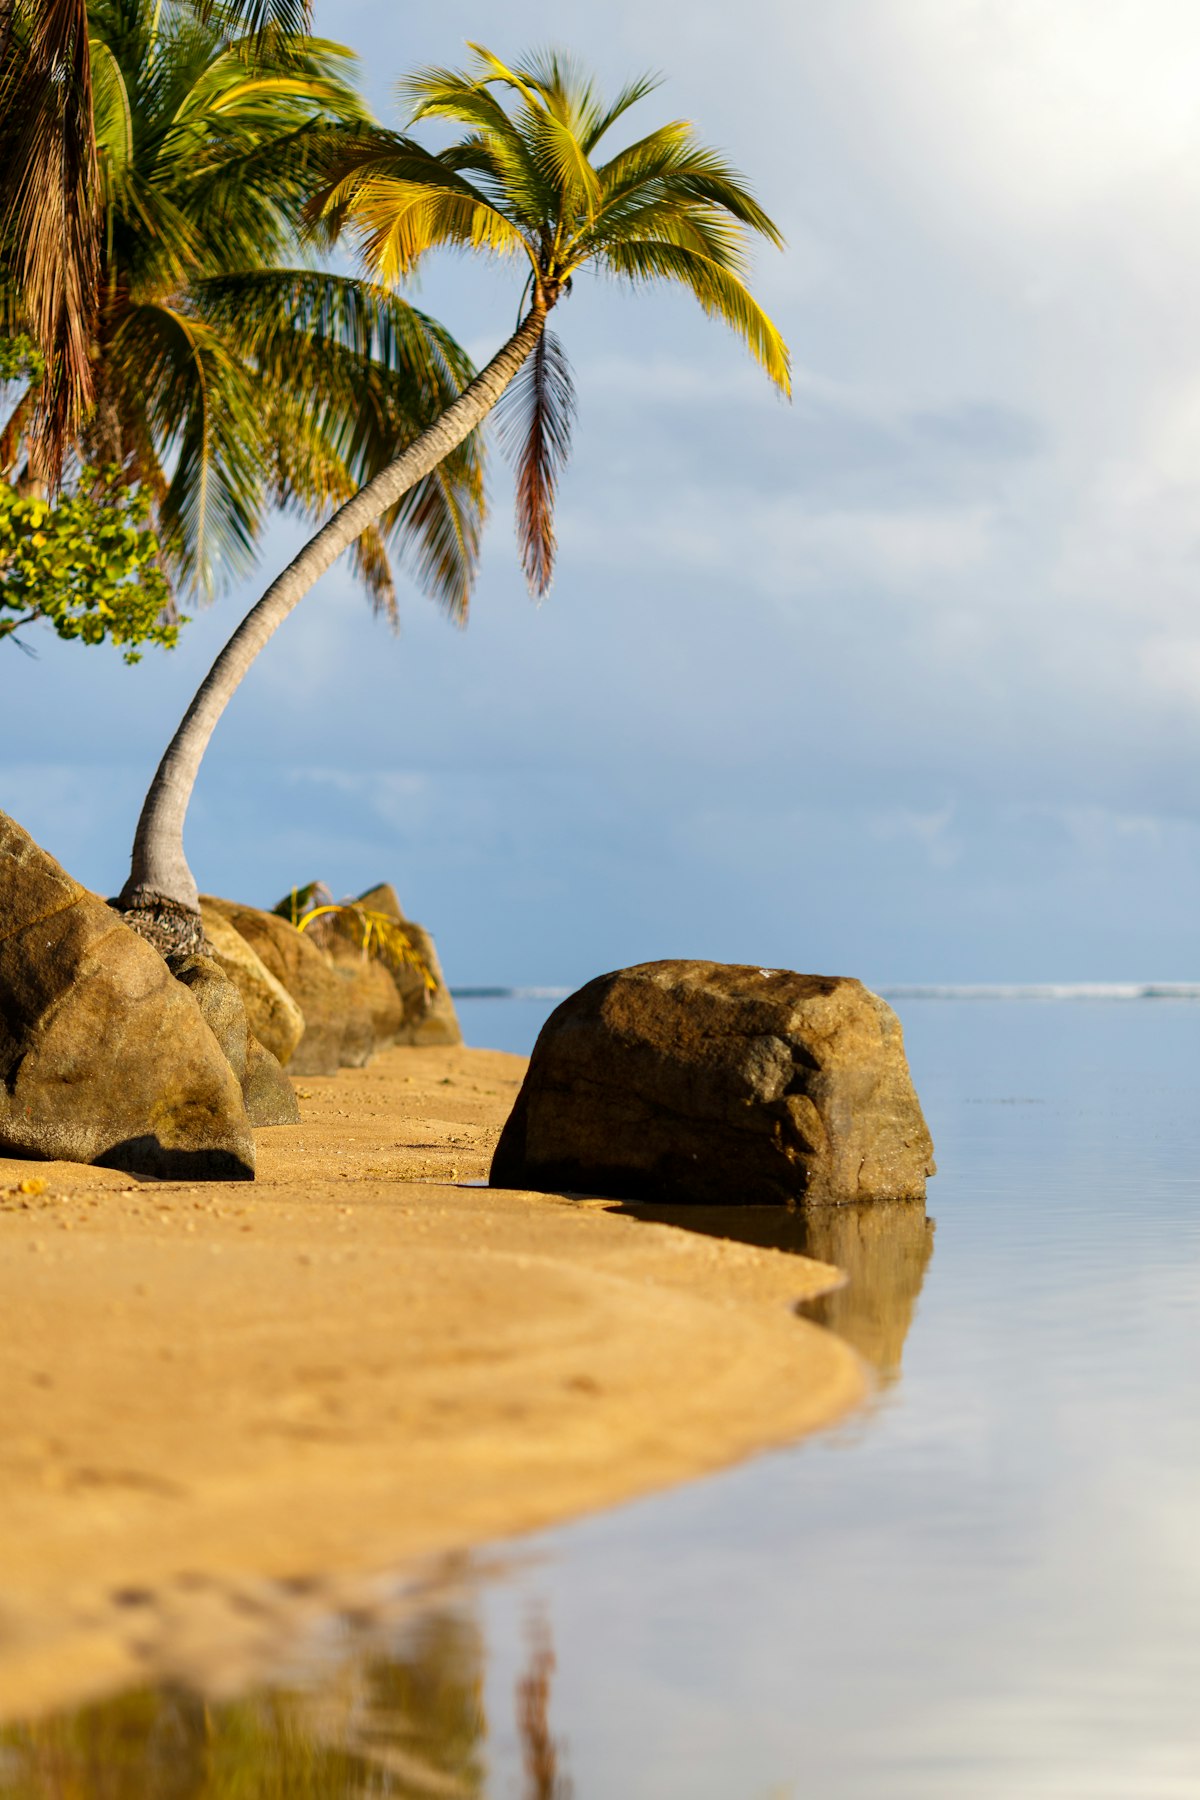 Beaches in Puerto Vallarta are suitable for recreation